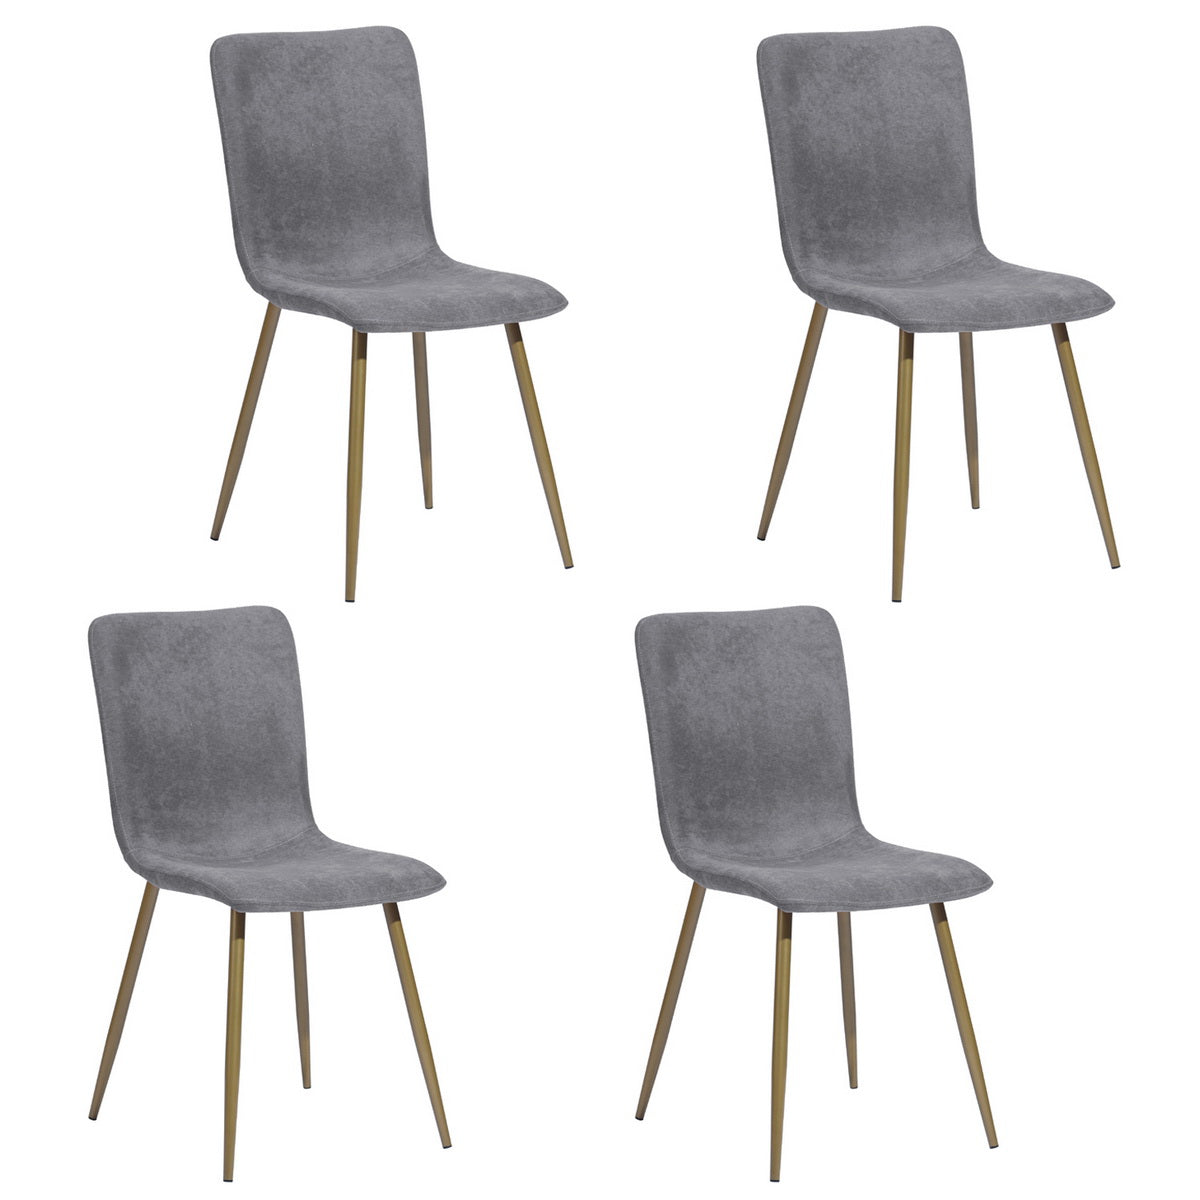 4)-HomyCasa Mid-Century of Dining SCARGILL Modern Chair(Set